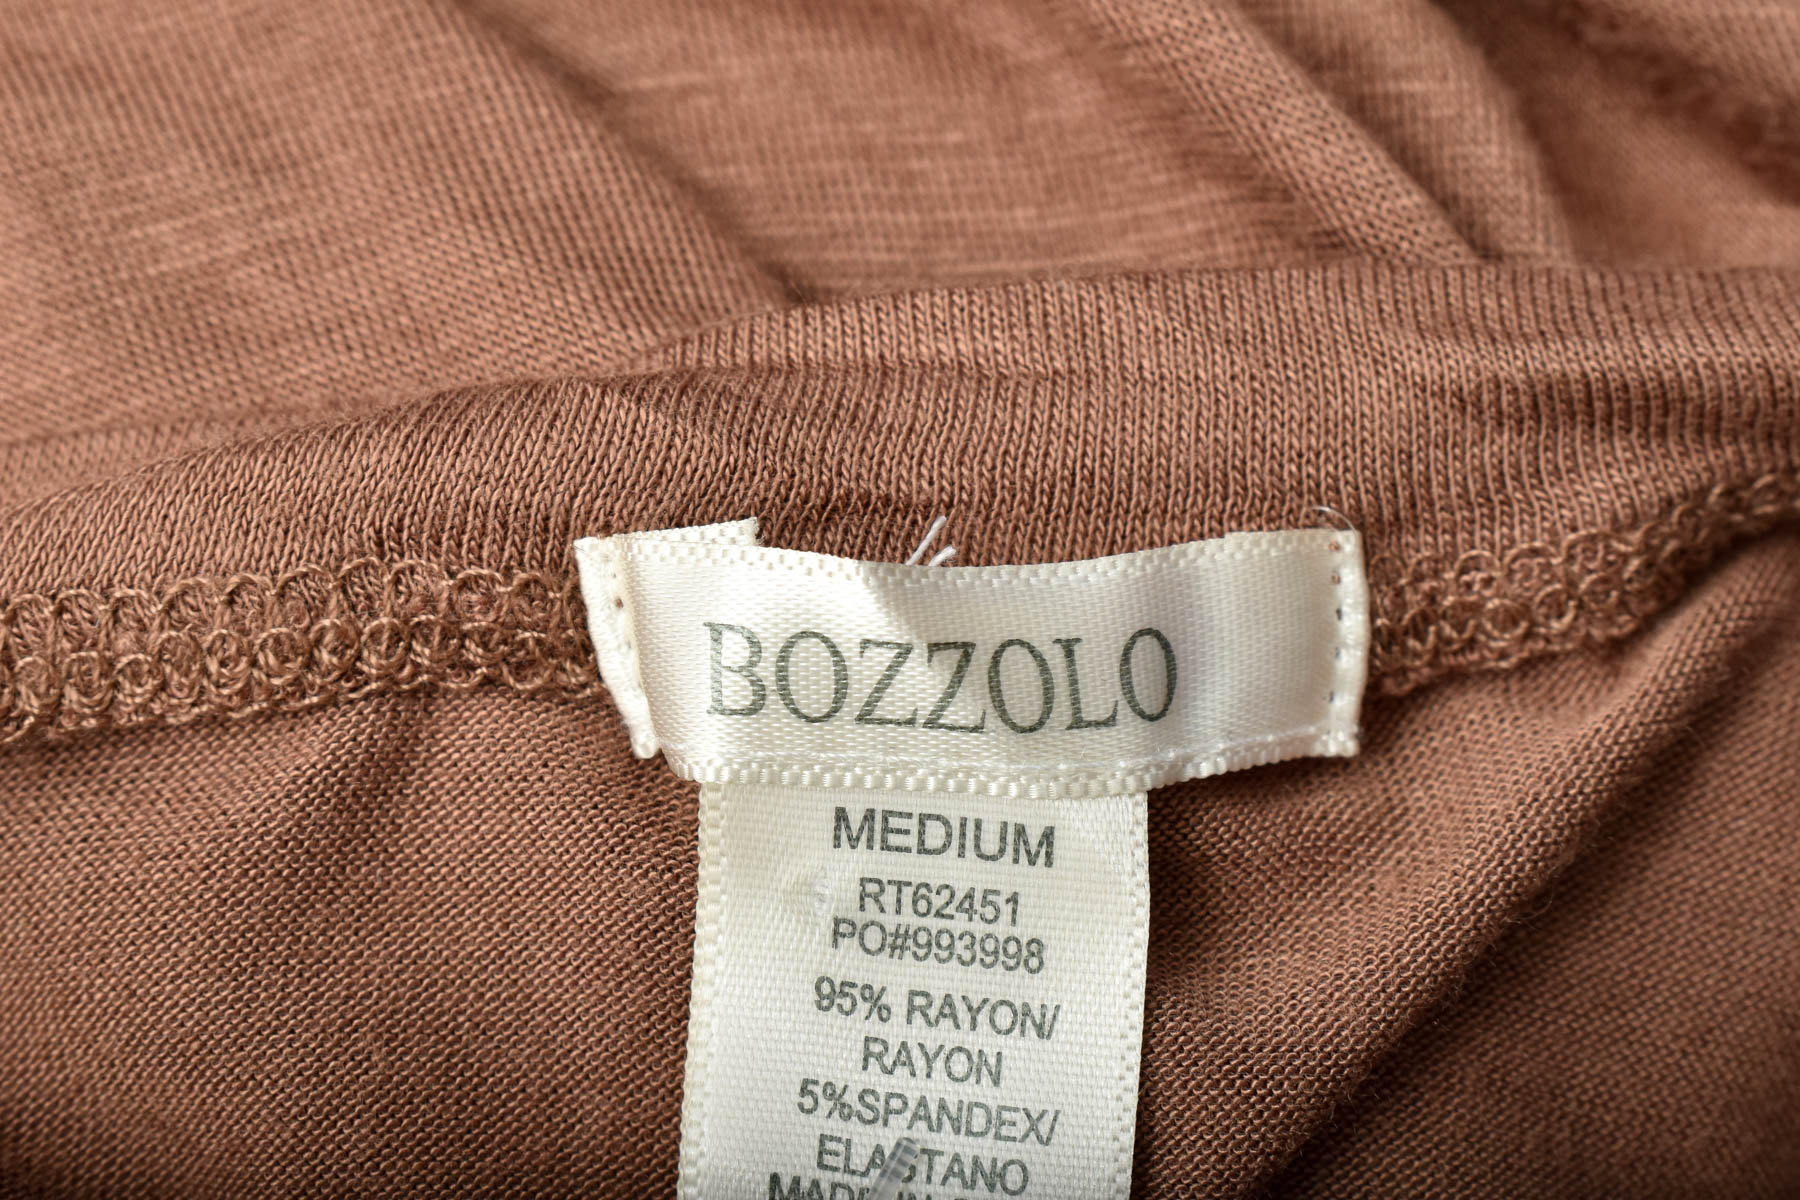 Women's blouse - Bozzolo - 2